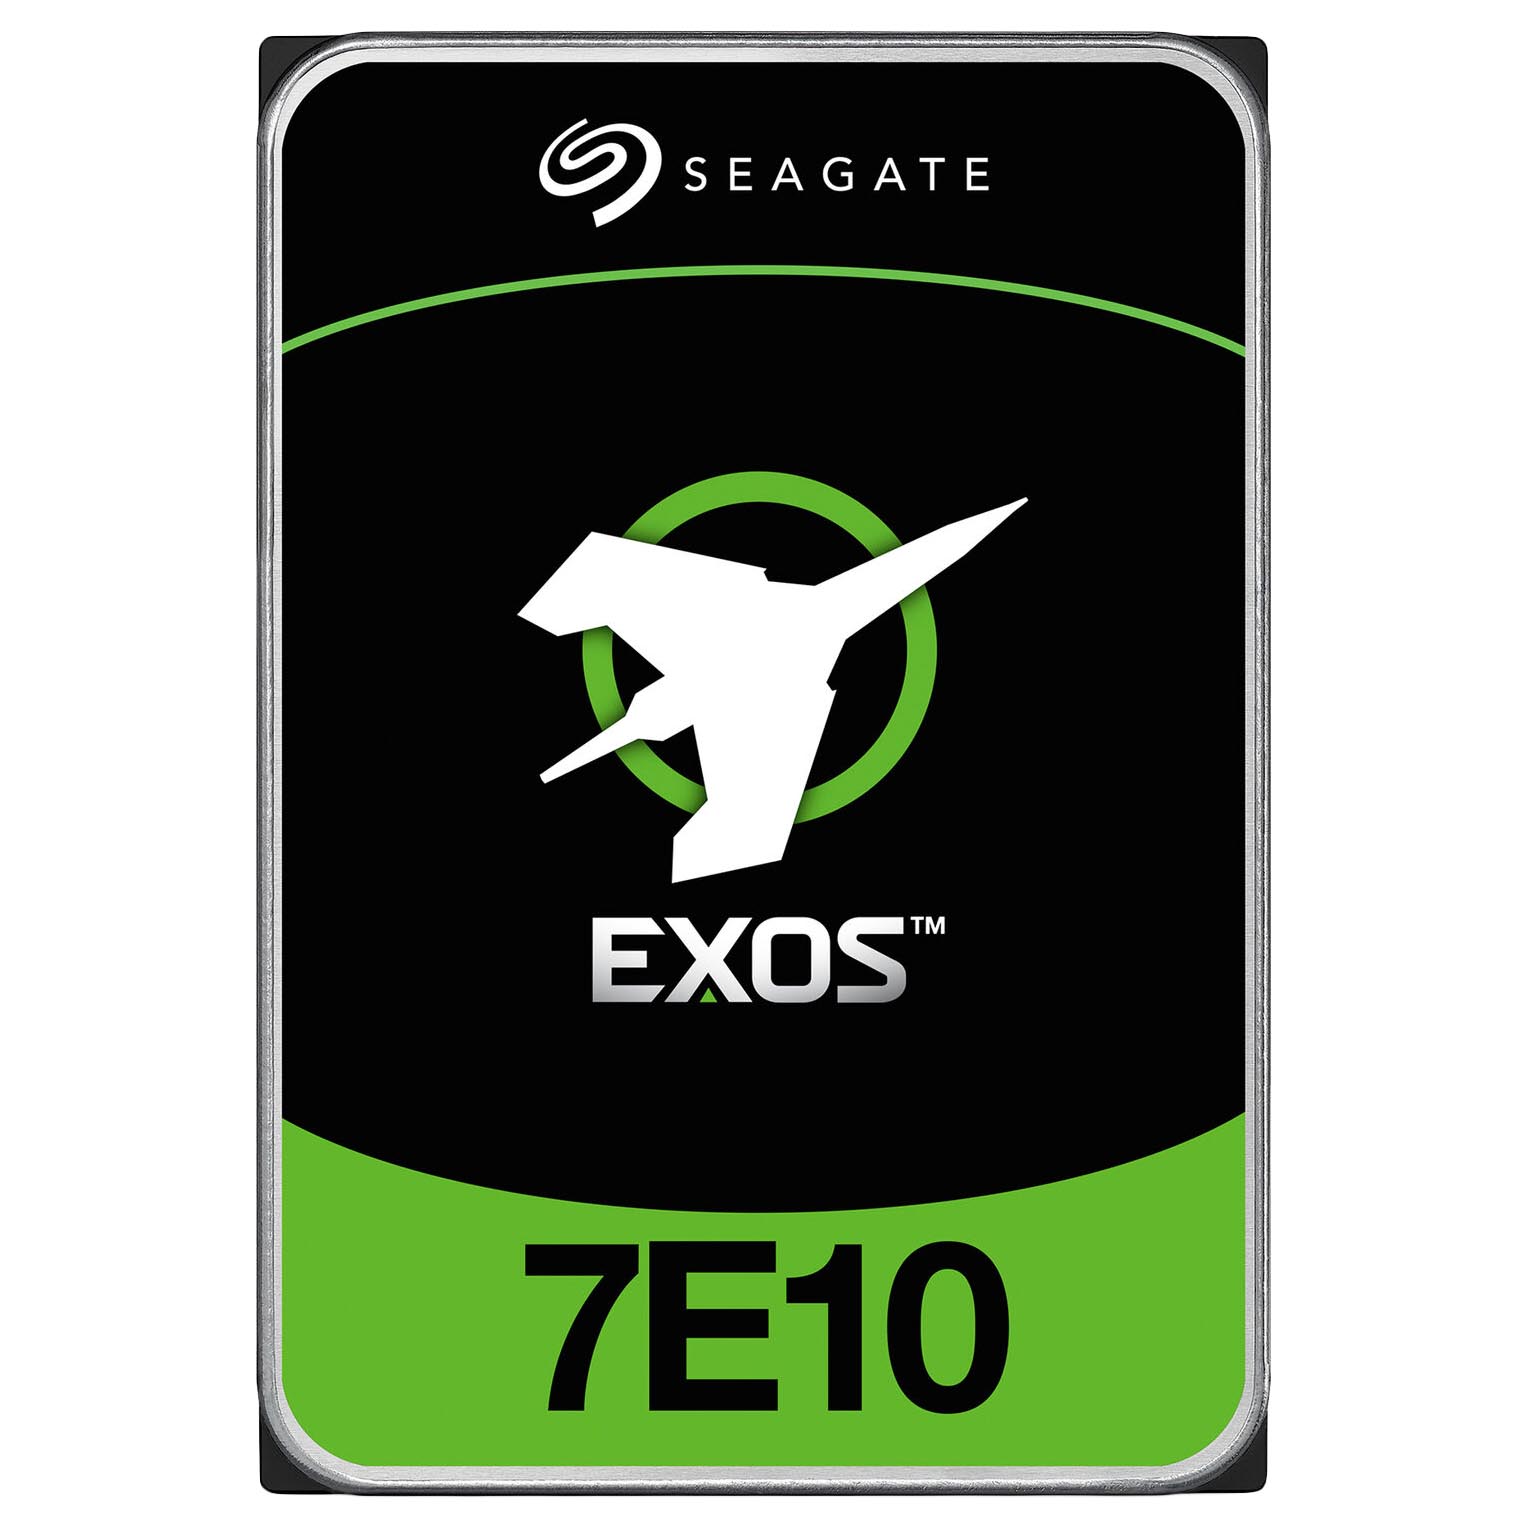 Внутренний жесткий диск Seagate Exos 7E10, ST2000NM001B, 2 Тб жесткий диск seagate exos 7e10 10тб st10000nm017b